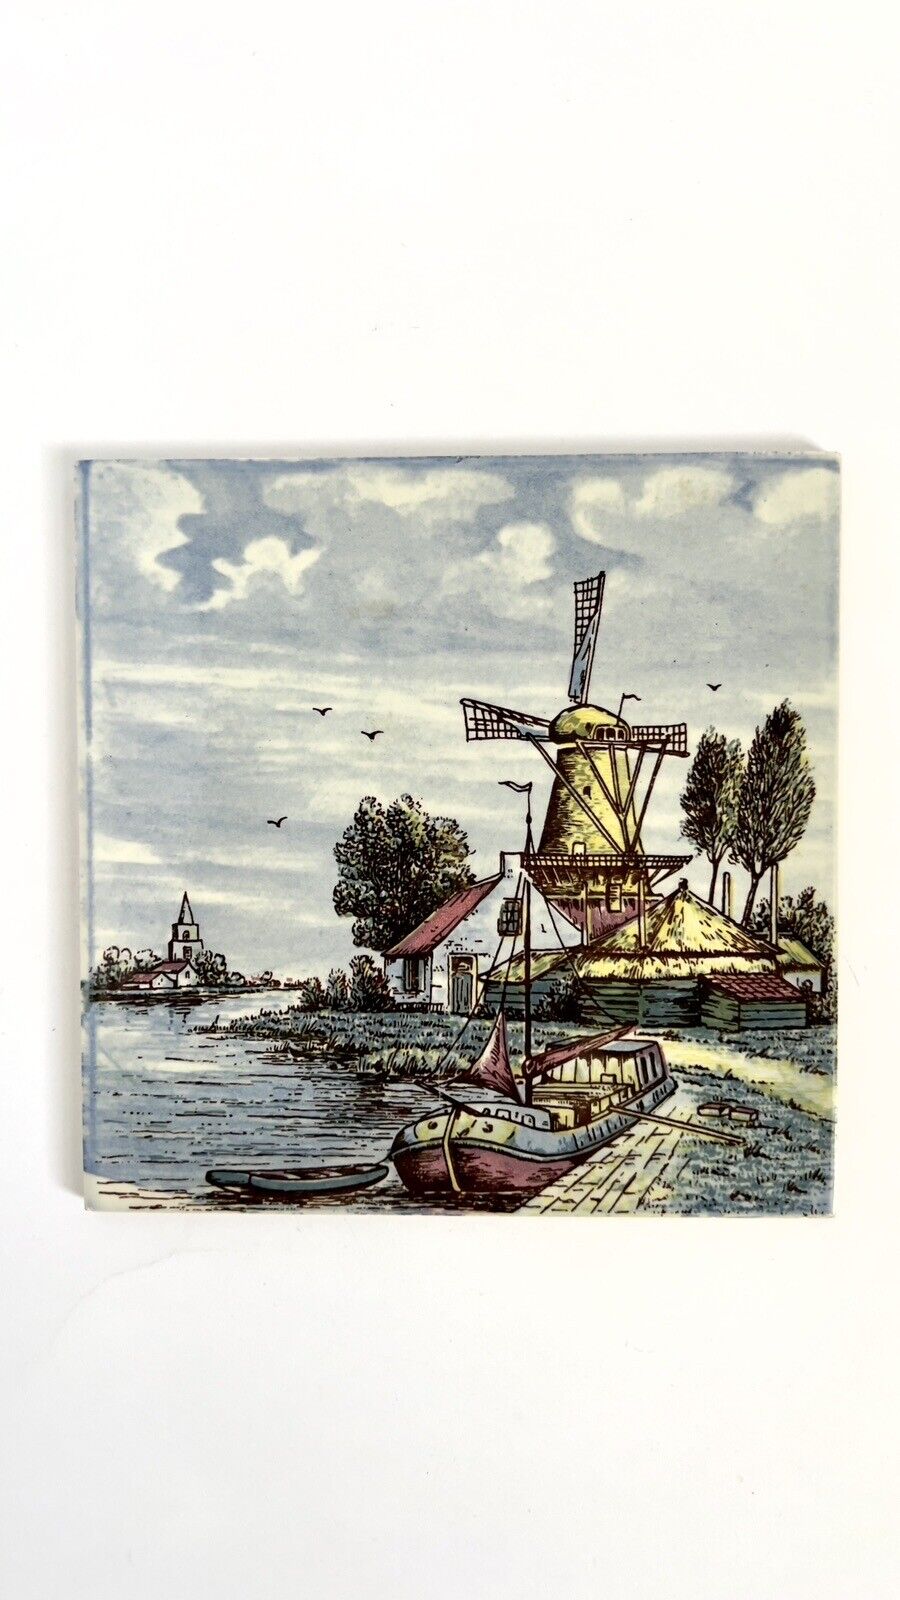 Delft’s Trivet Ceramic Tile Holland Windmill Bridge Hand Painted 6 x 6 Vintage